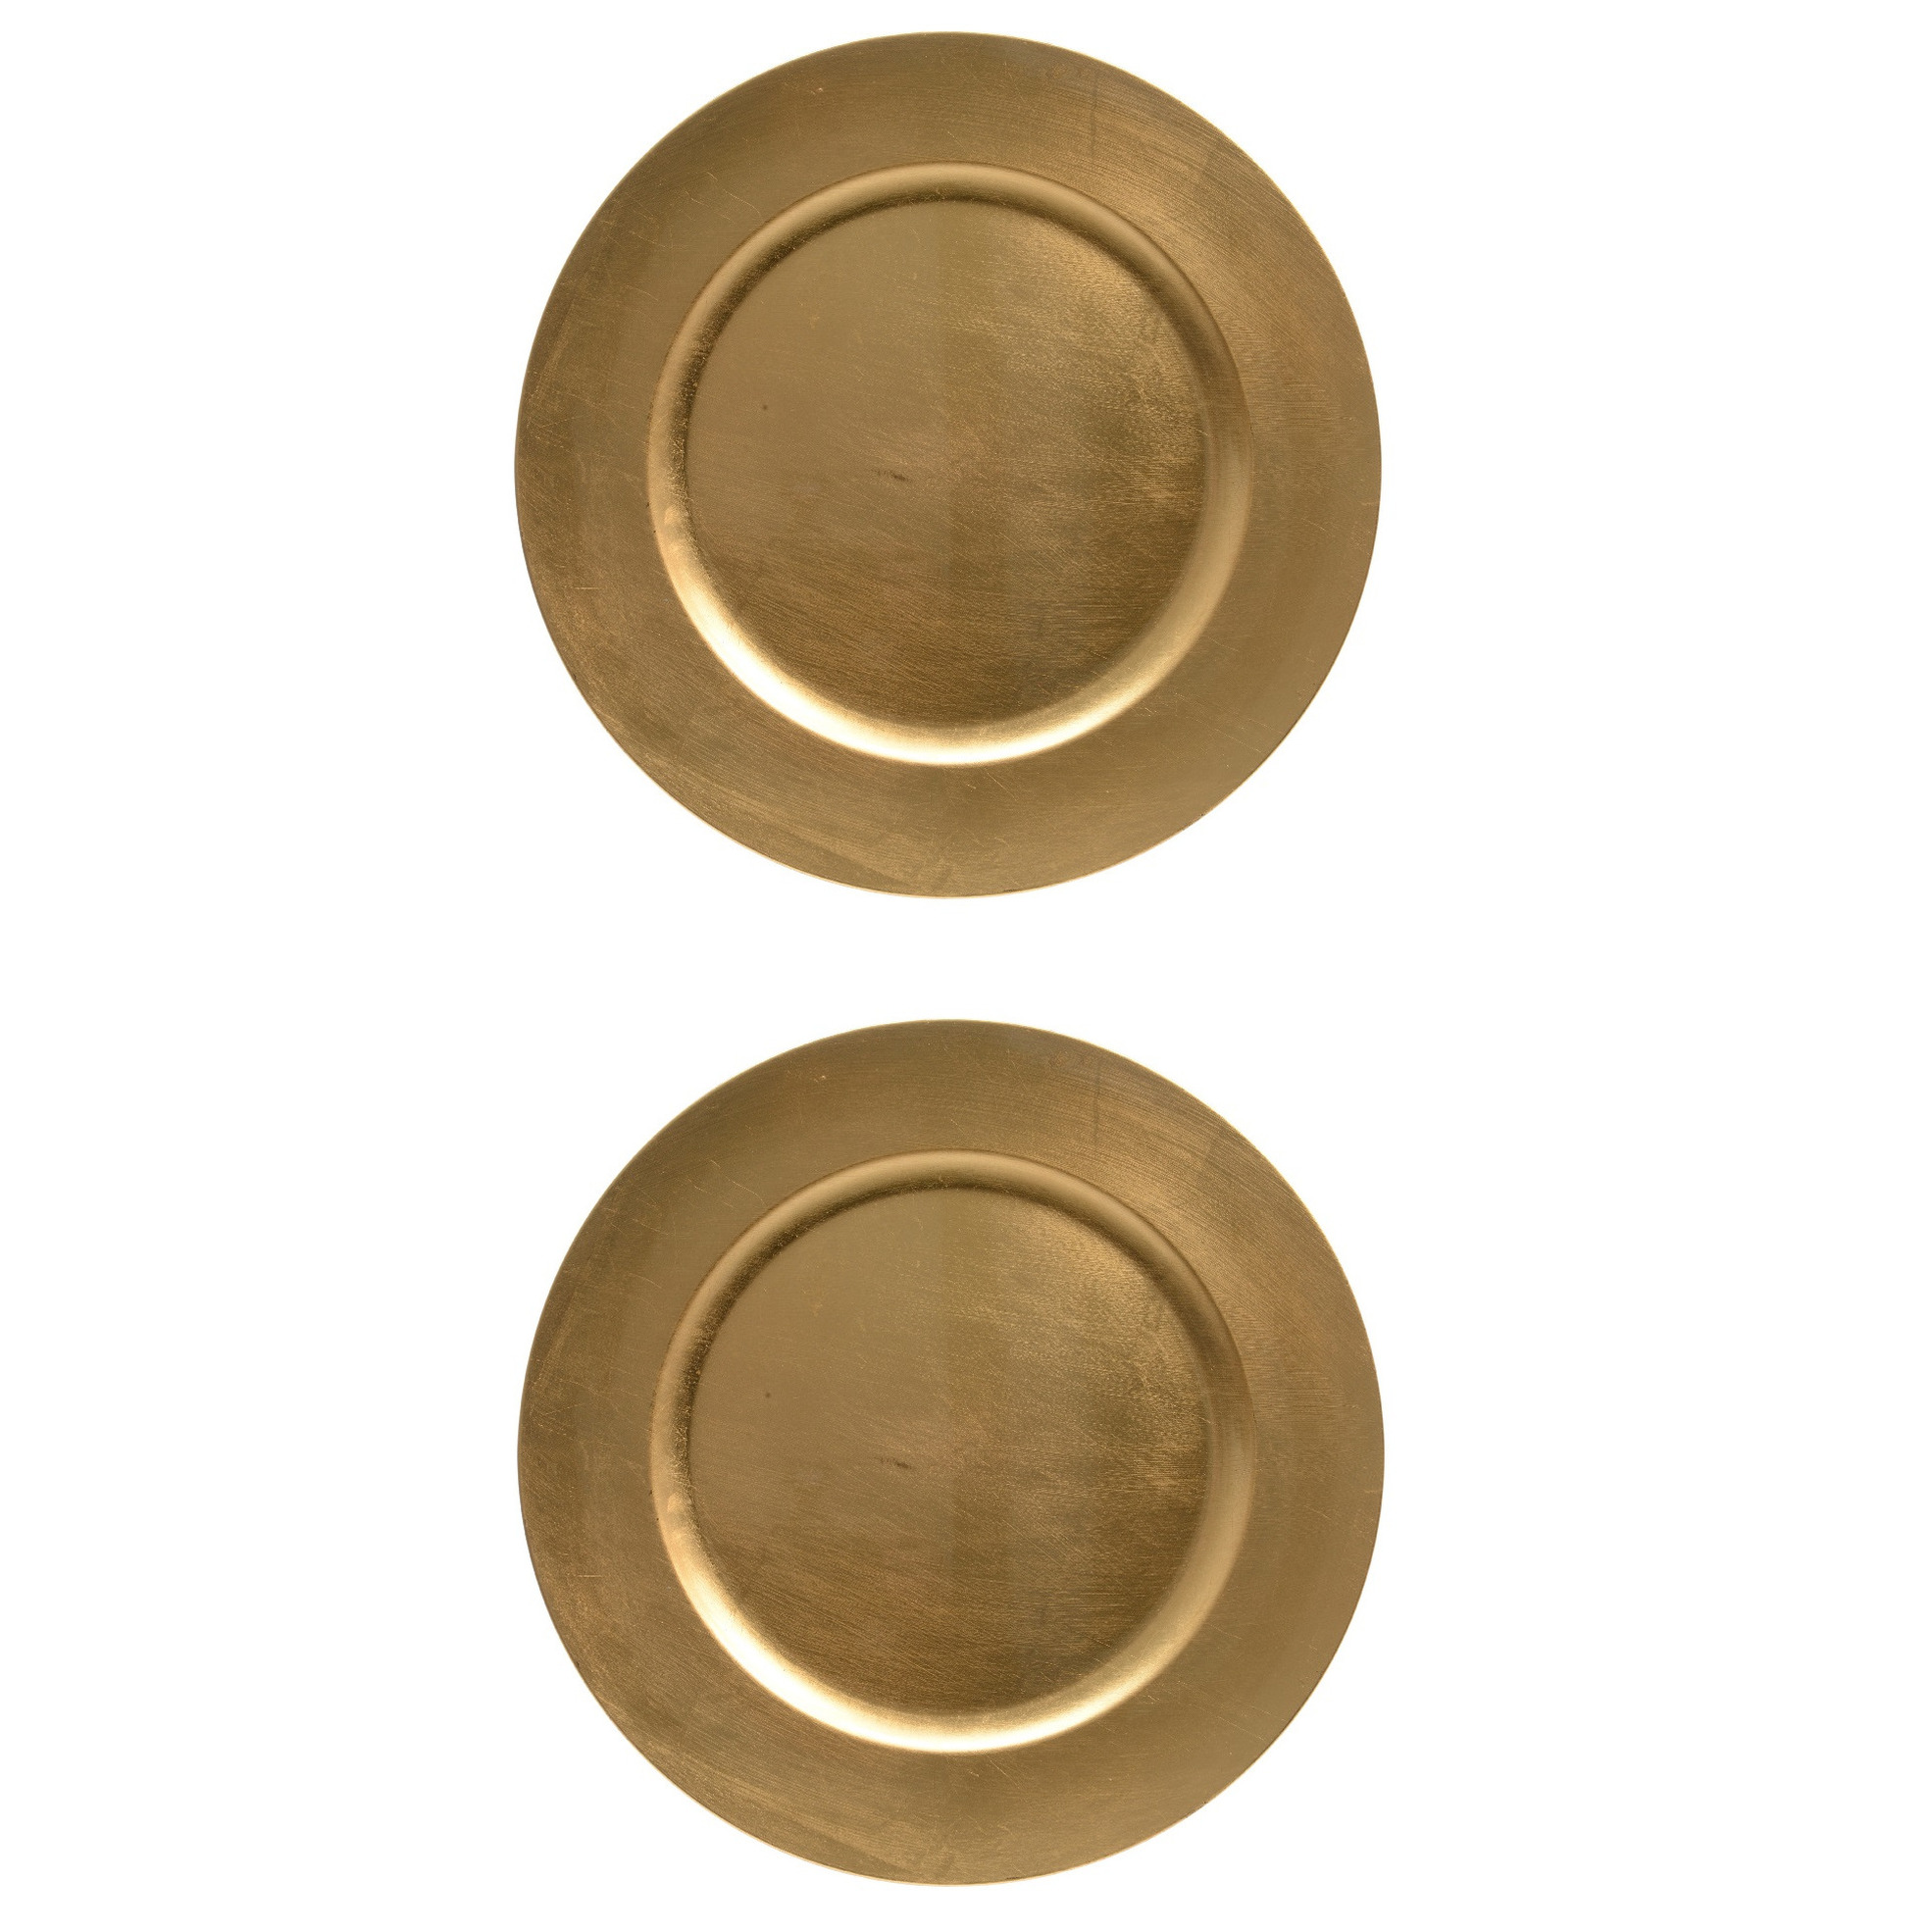 4x stuks diner borden-onderborden goud glimmend 33 cm